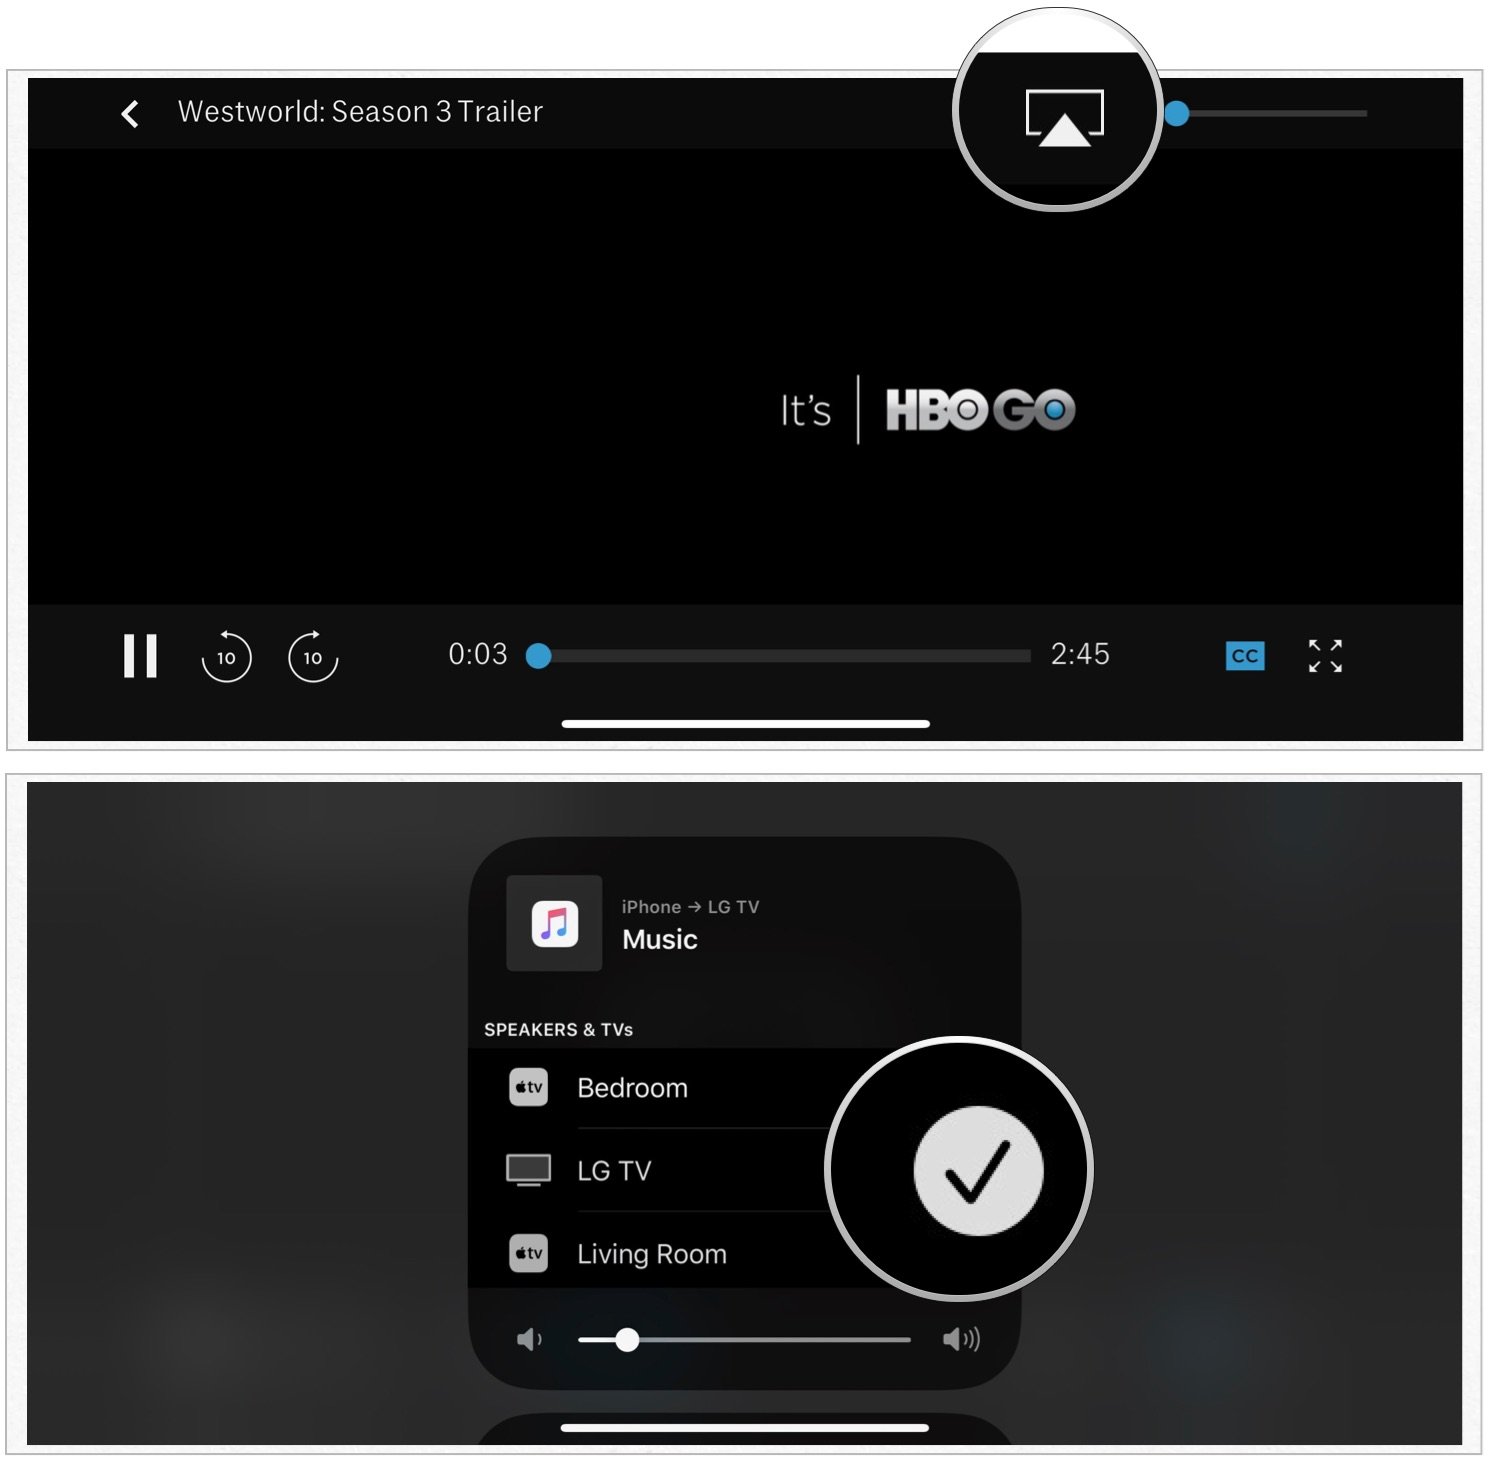 LG TV Airplay. Airplay на телевизоре. Airplay on LG TV. Android TV приложение AIRPAY. Поддерживает airplay